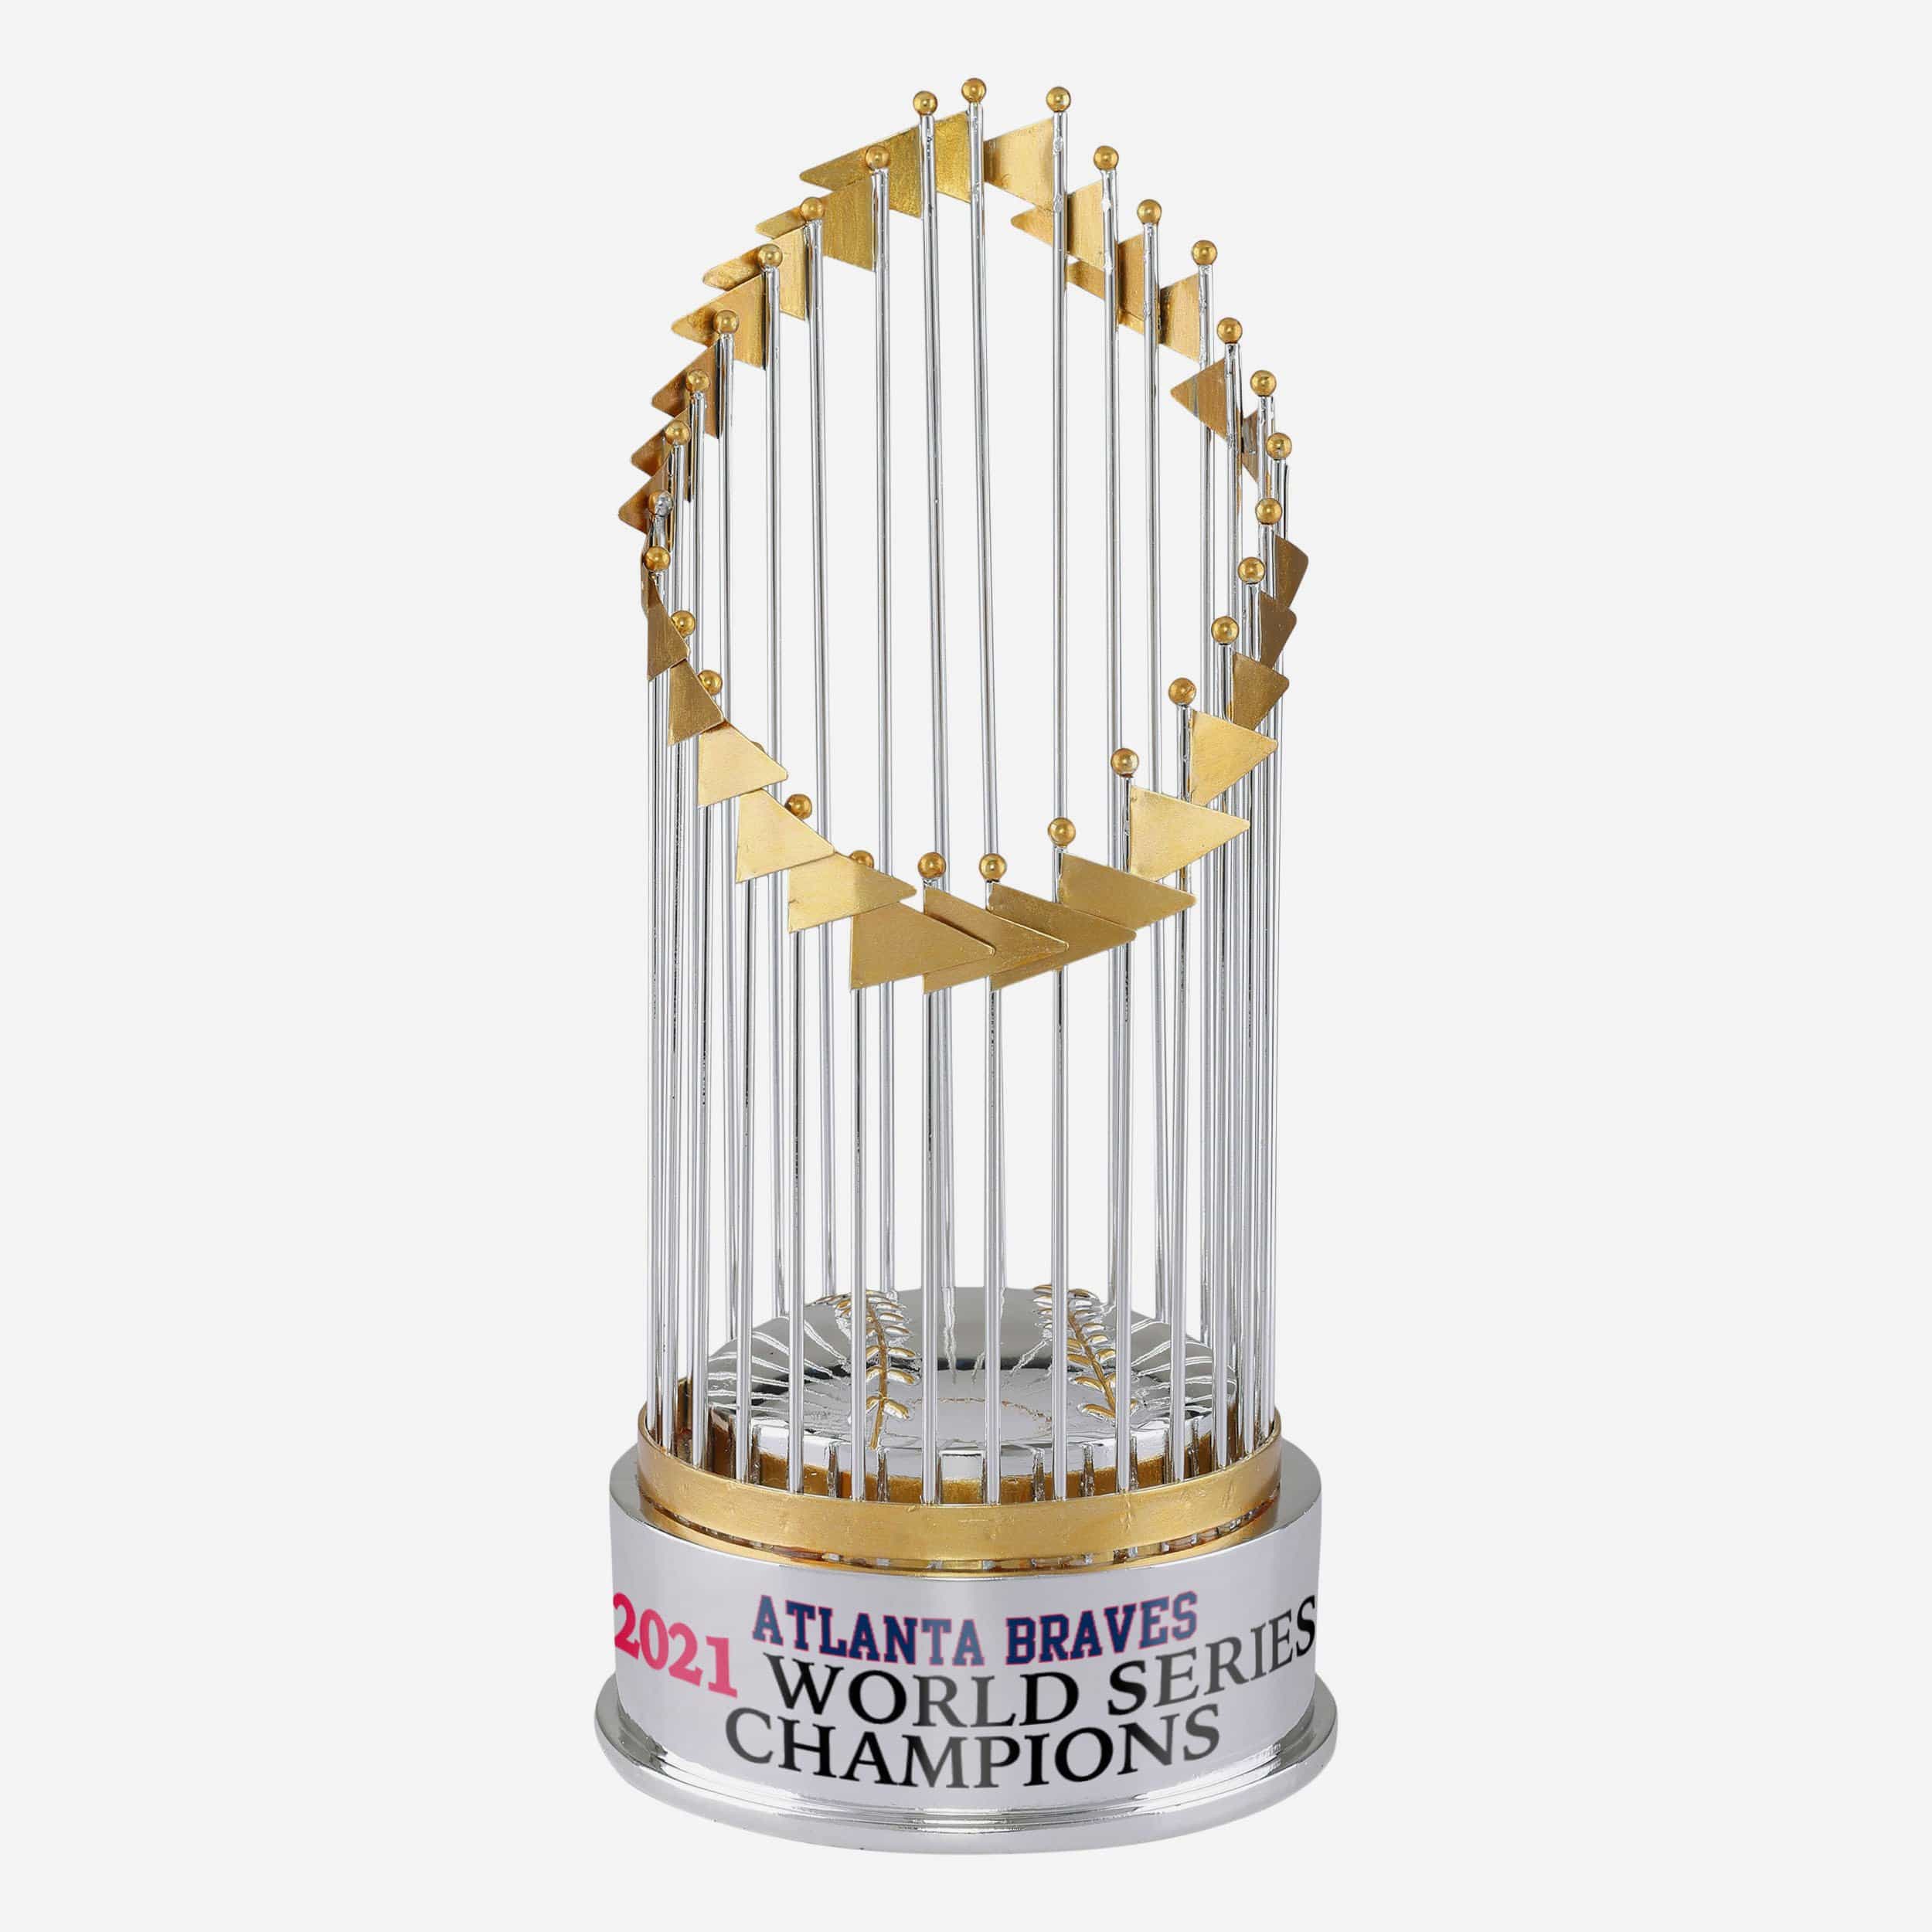 Atlanta Braves 2021 World Series Champions Replica Trophy